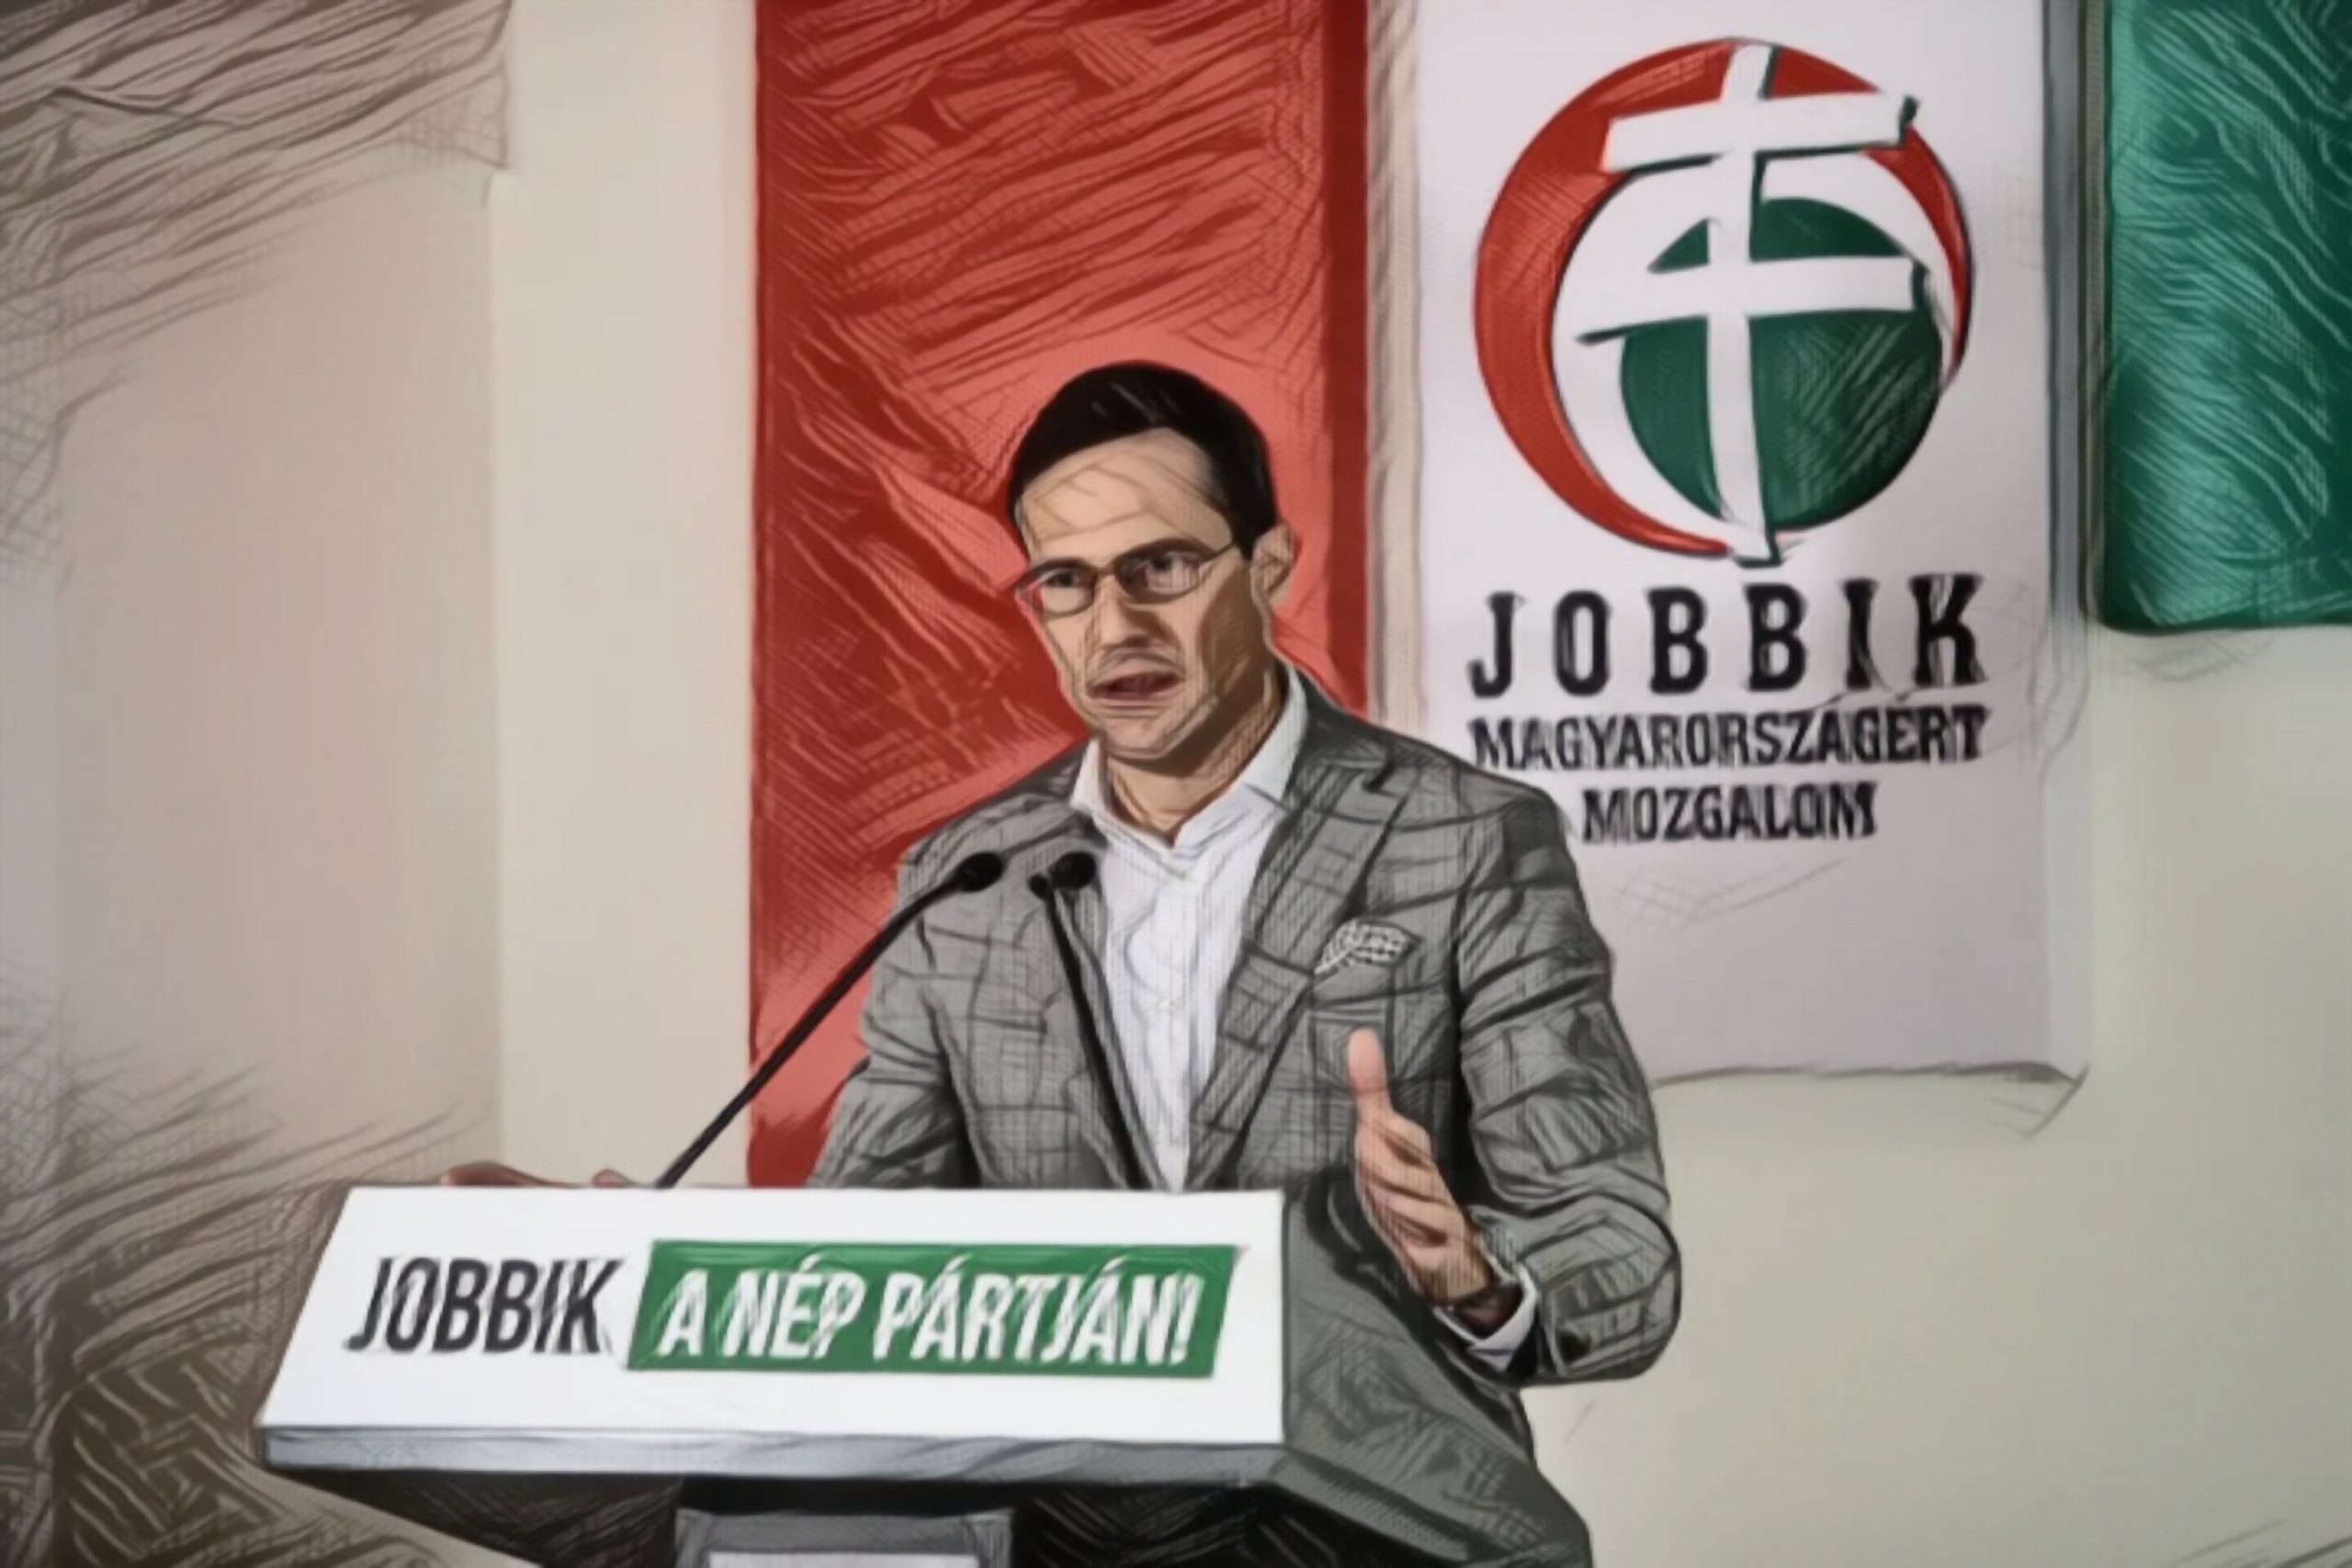 Jobbik: From Eurasianist Roots to Globalist Lackey